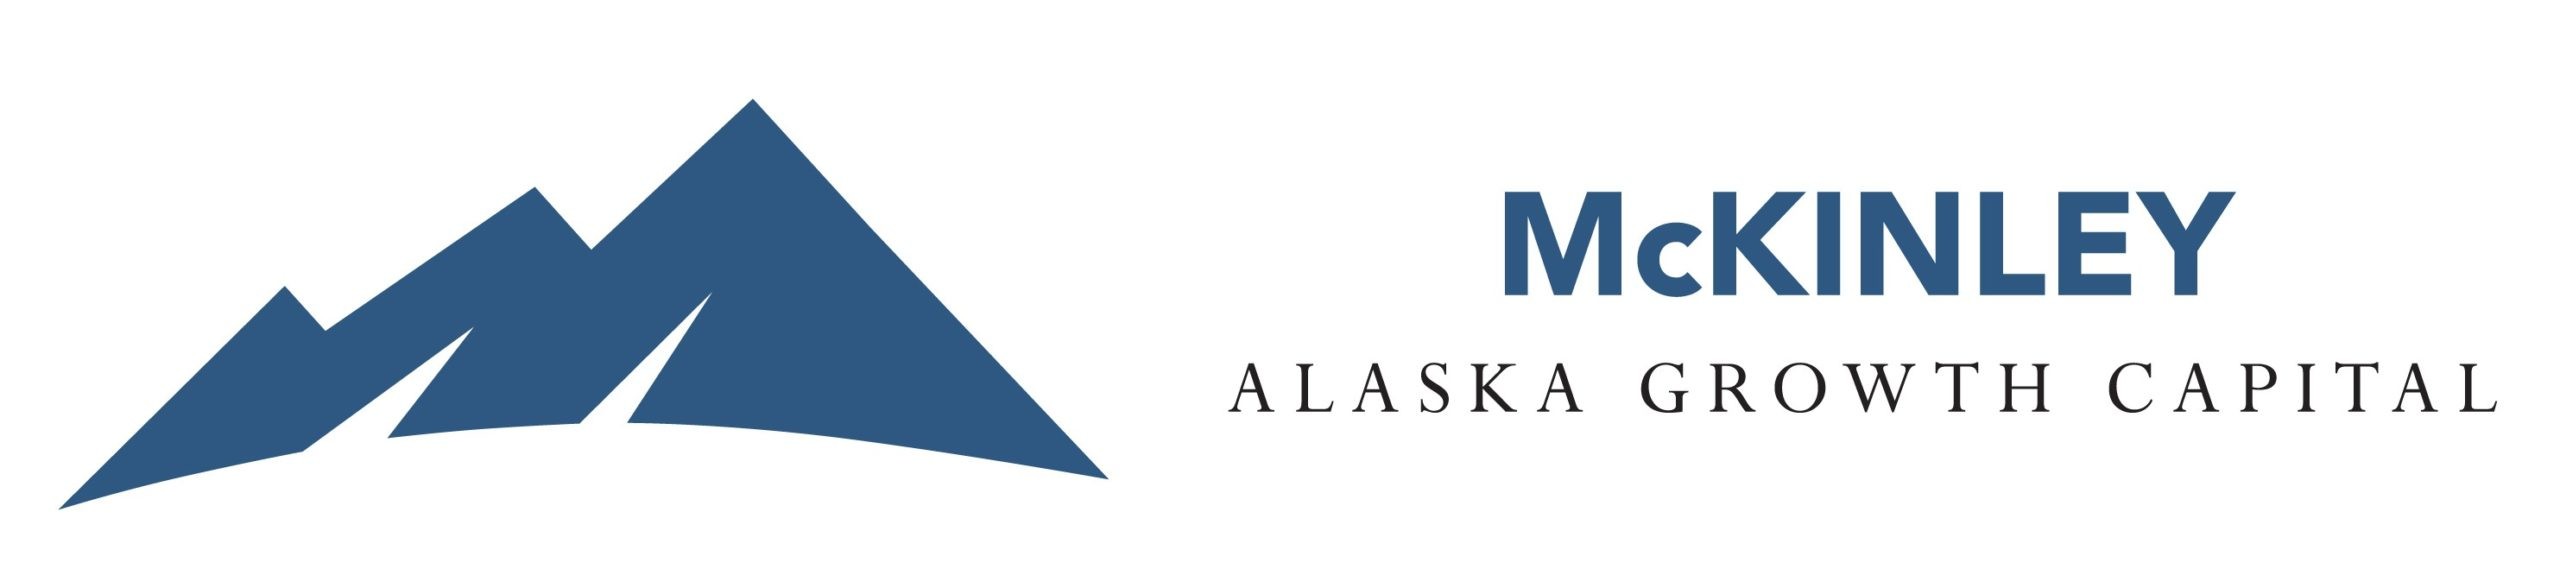 McKinley Alaska Growth Capital Logo